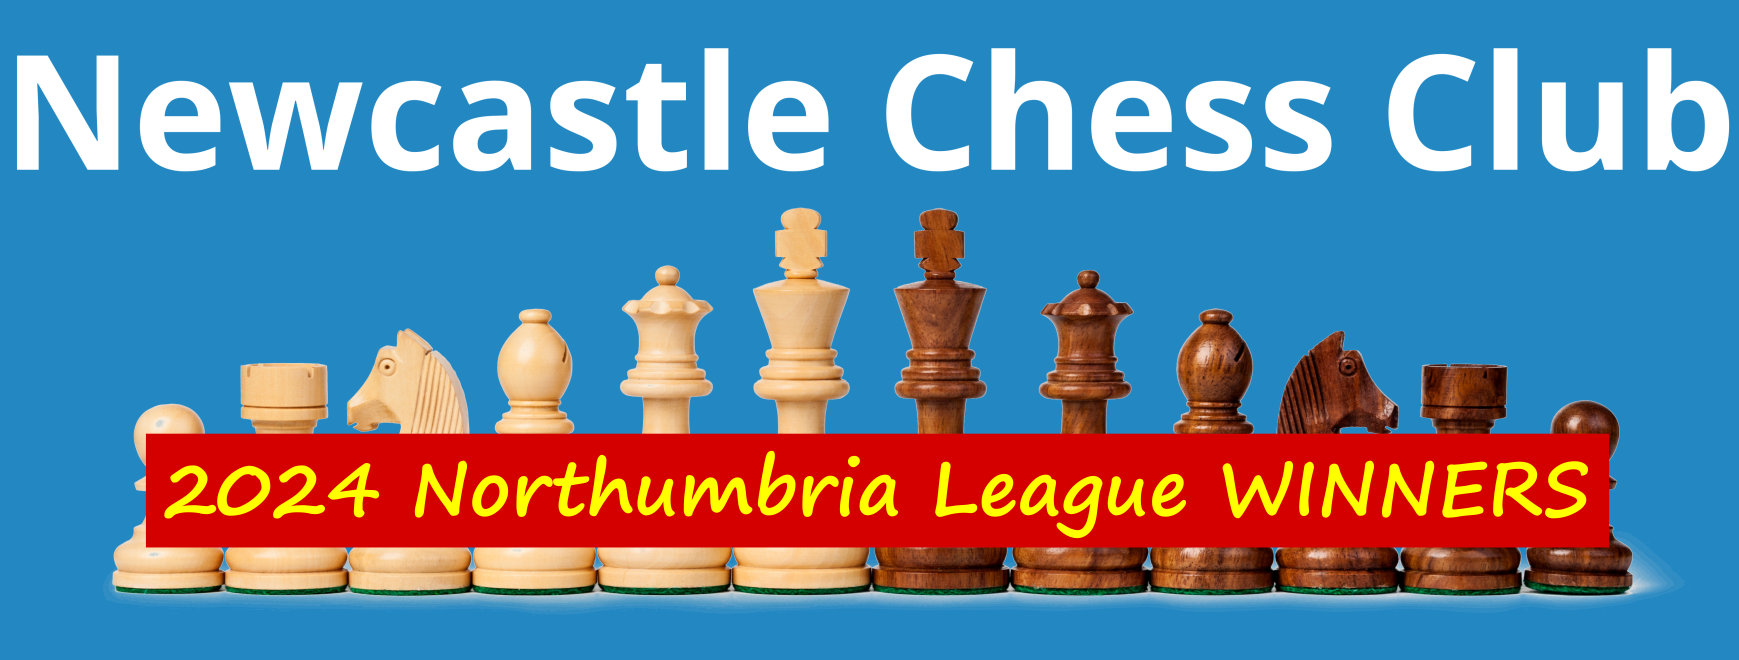 Newcastle Chess Club